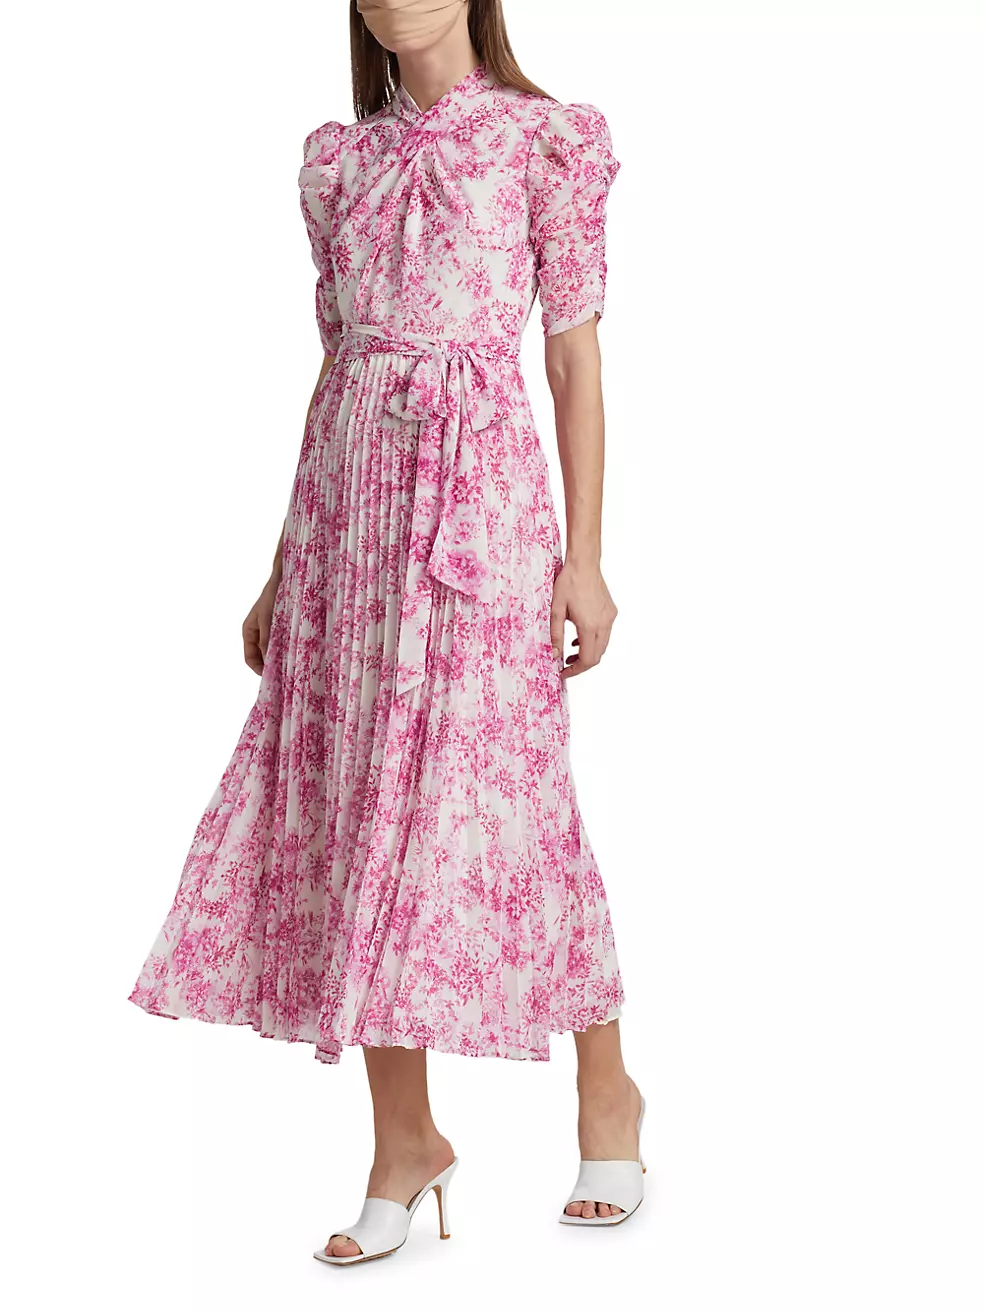 Shop ML Belted Fifth Midi-Dress Lhuillier | Floral Pleated Saks Avenue Monique